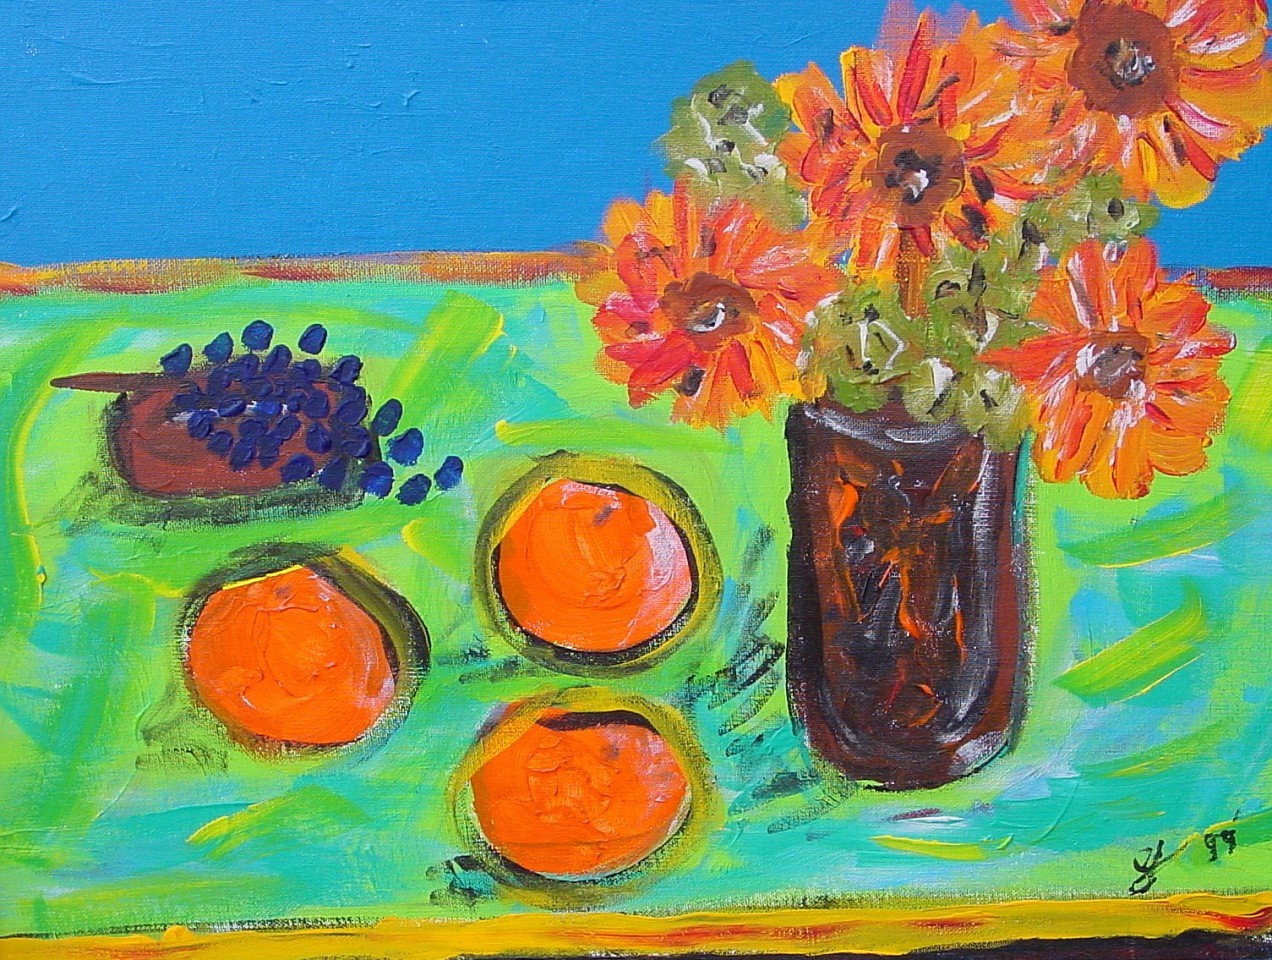 Diego Jacobson, Oranges I, 1999
Acrylic on Canvas, 14 x 16 in. (35.6 x 40.6 cm)
0066